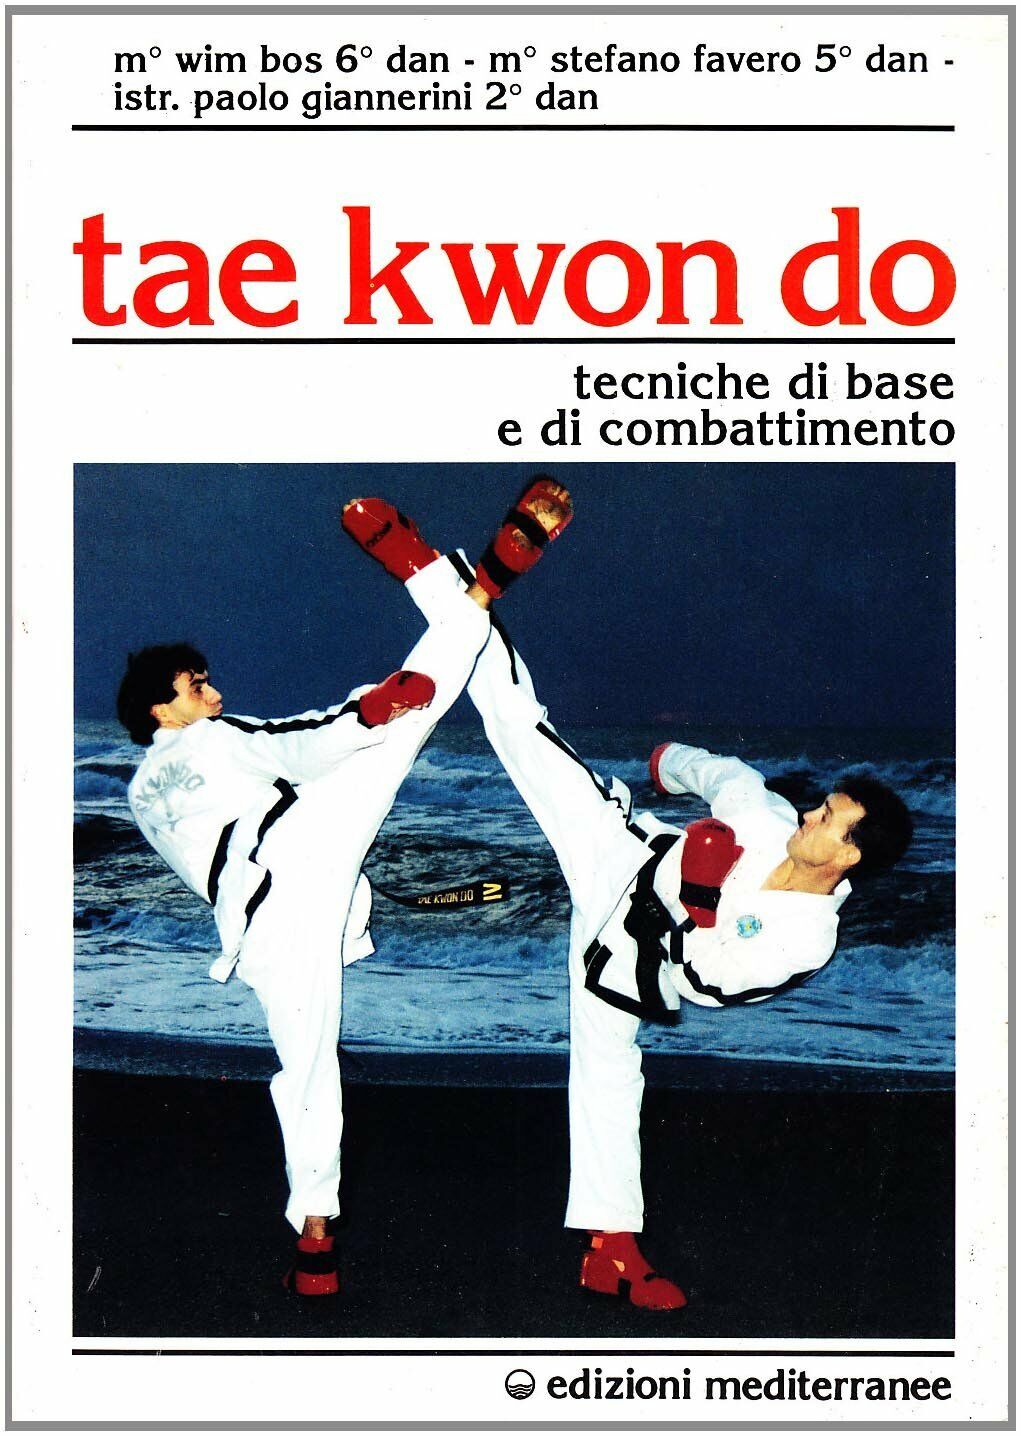 Tae kwon do - Wim Bos, Stefano Favero, Paolo Giannerini - Mediterranee, 1993 libro usato